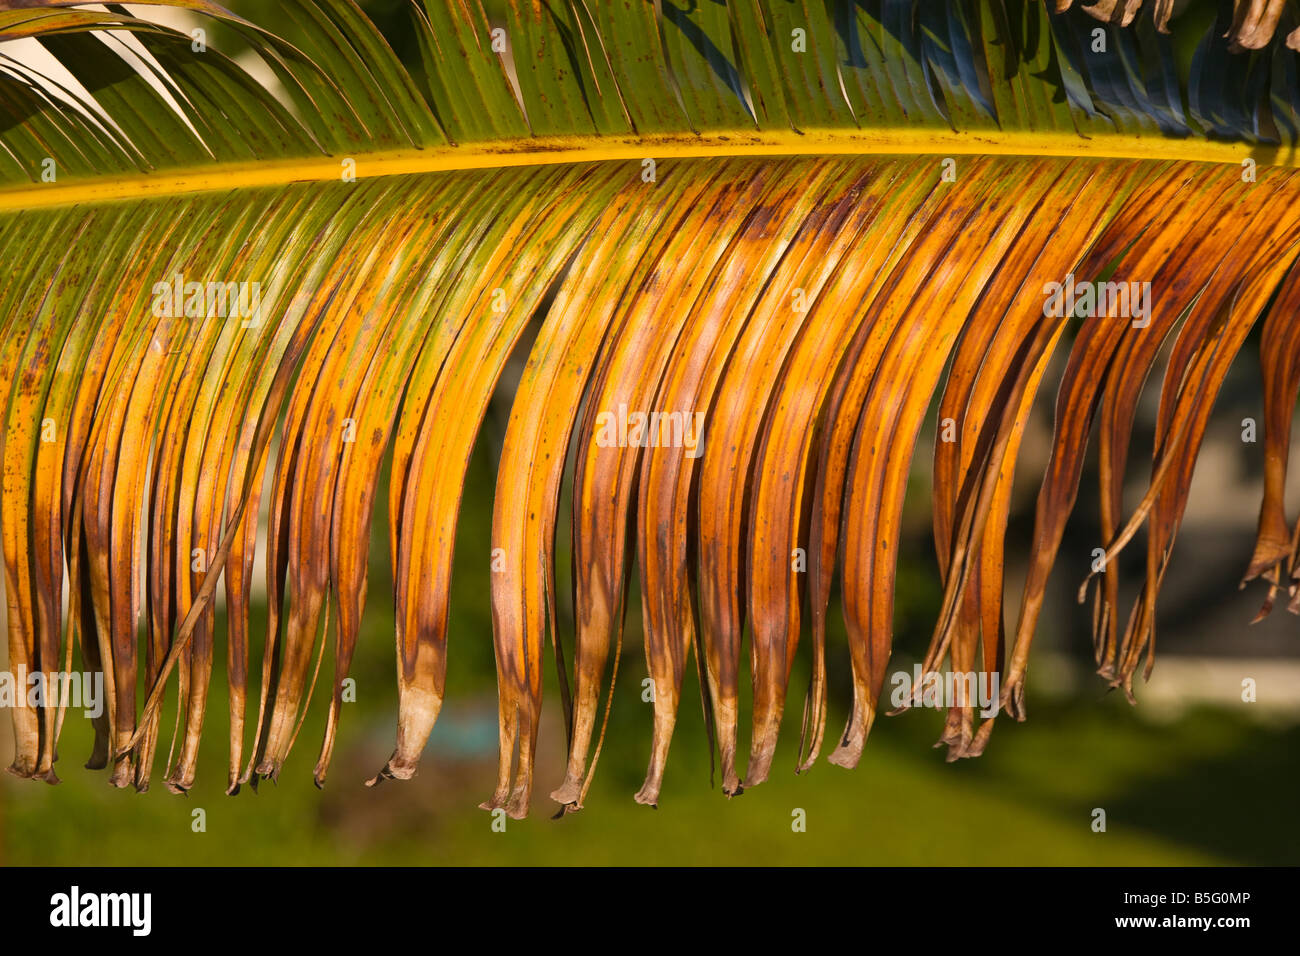 CAYE CAULKER BELIZE Detail of fan palm tree frond. Stock Photo